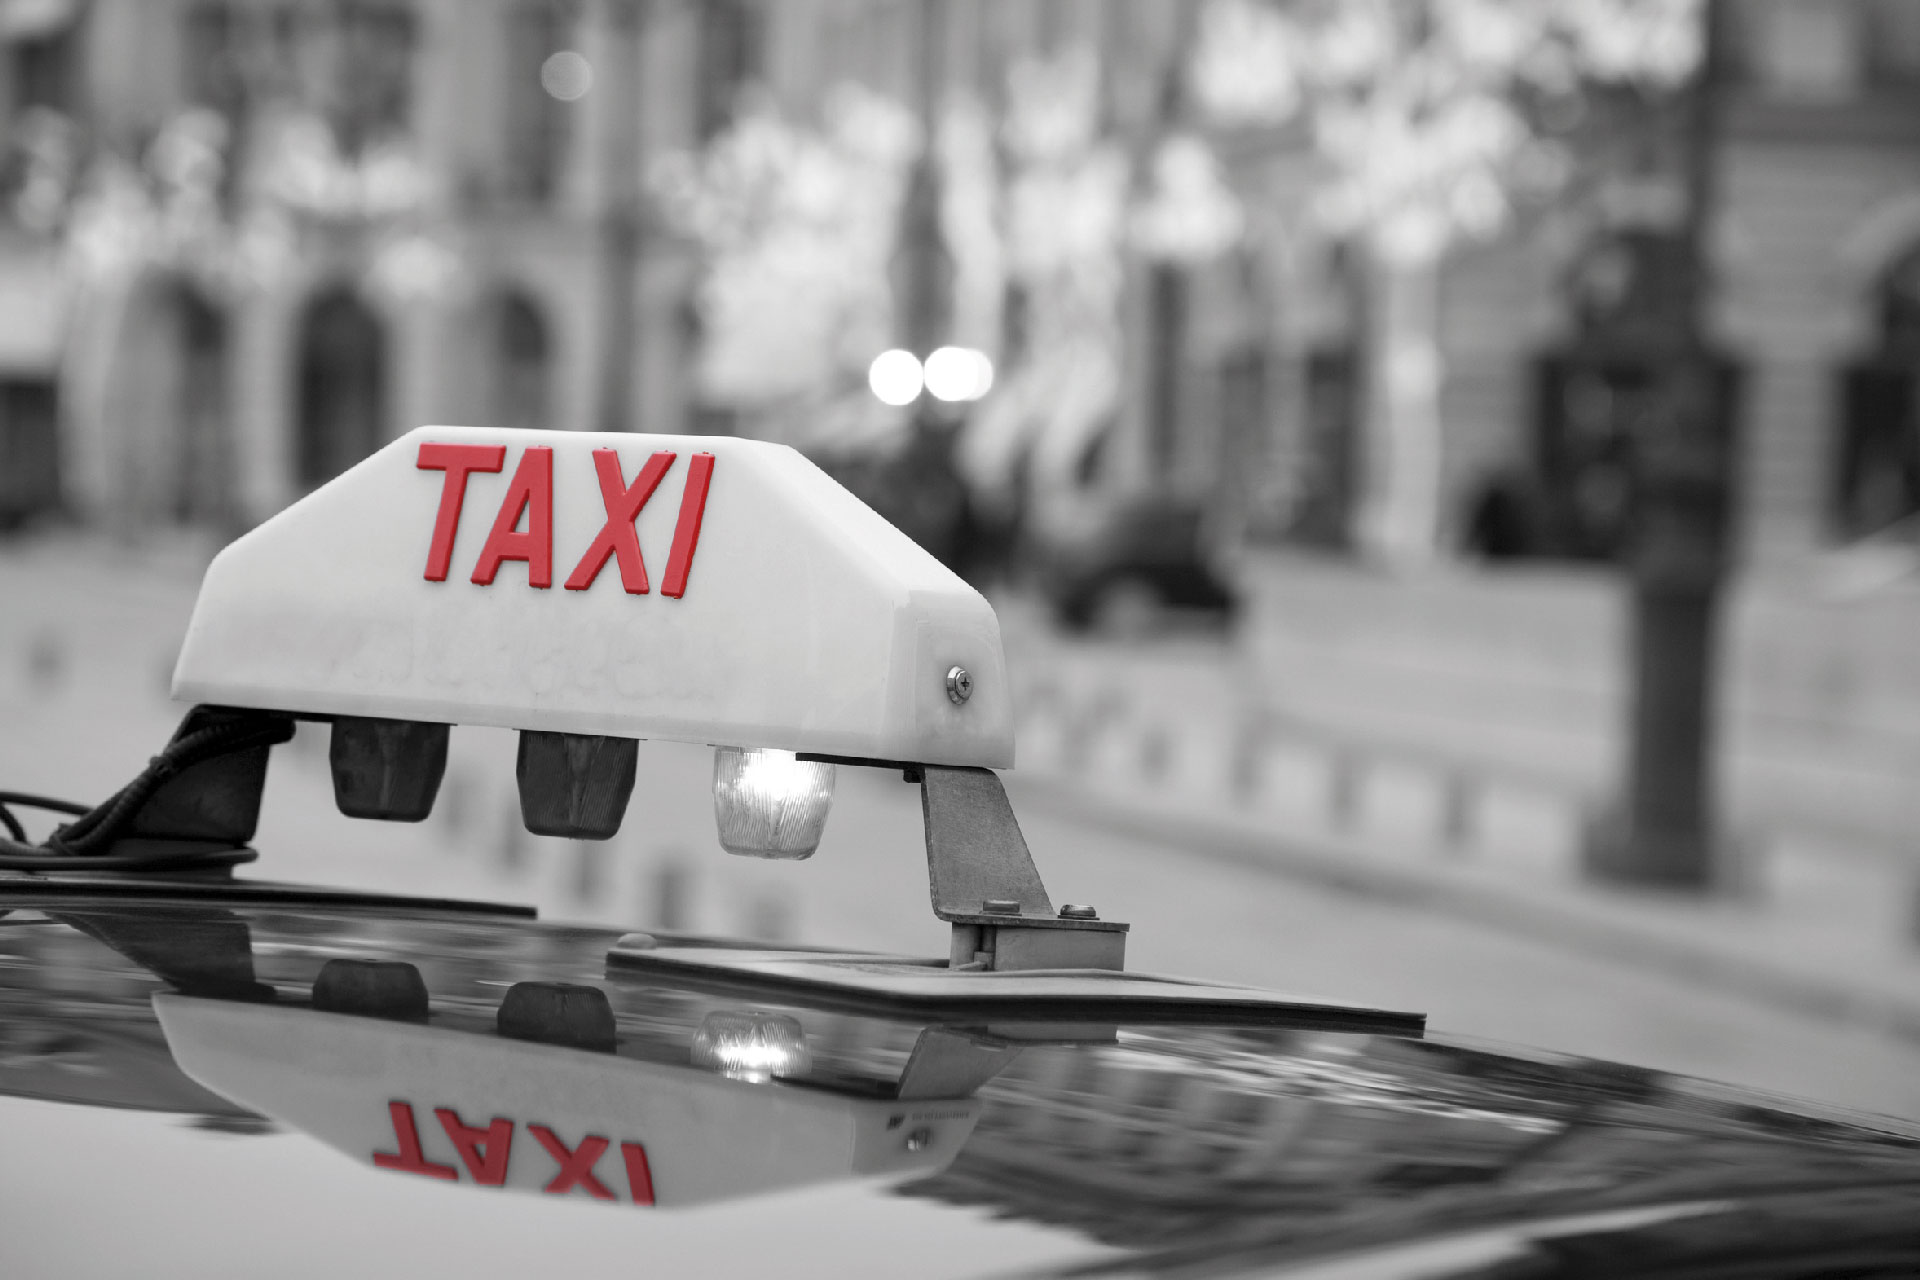 Такси в Париже. Танк такси. Танк такси фото. Прикольные картинки Парижа фон такси. Такси дом 4